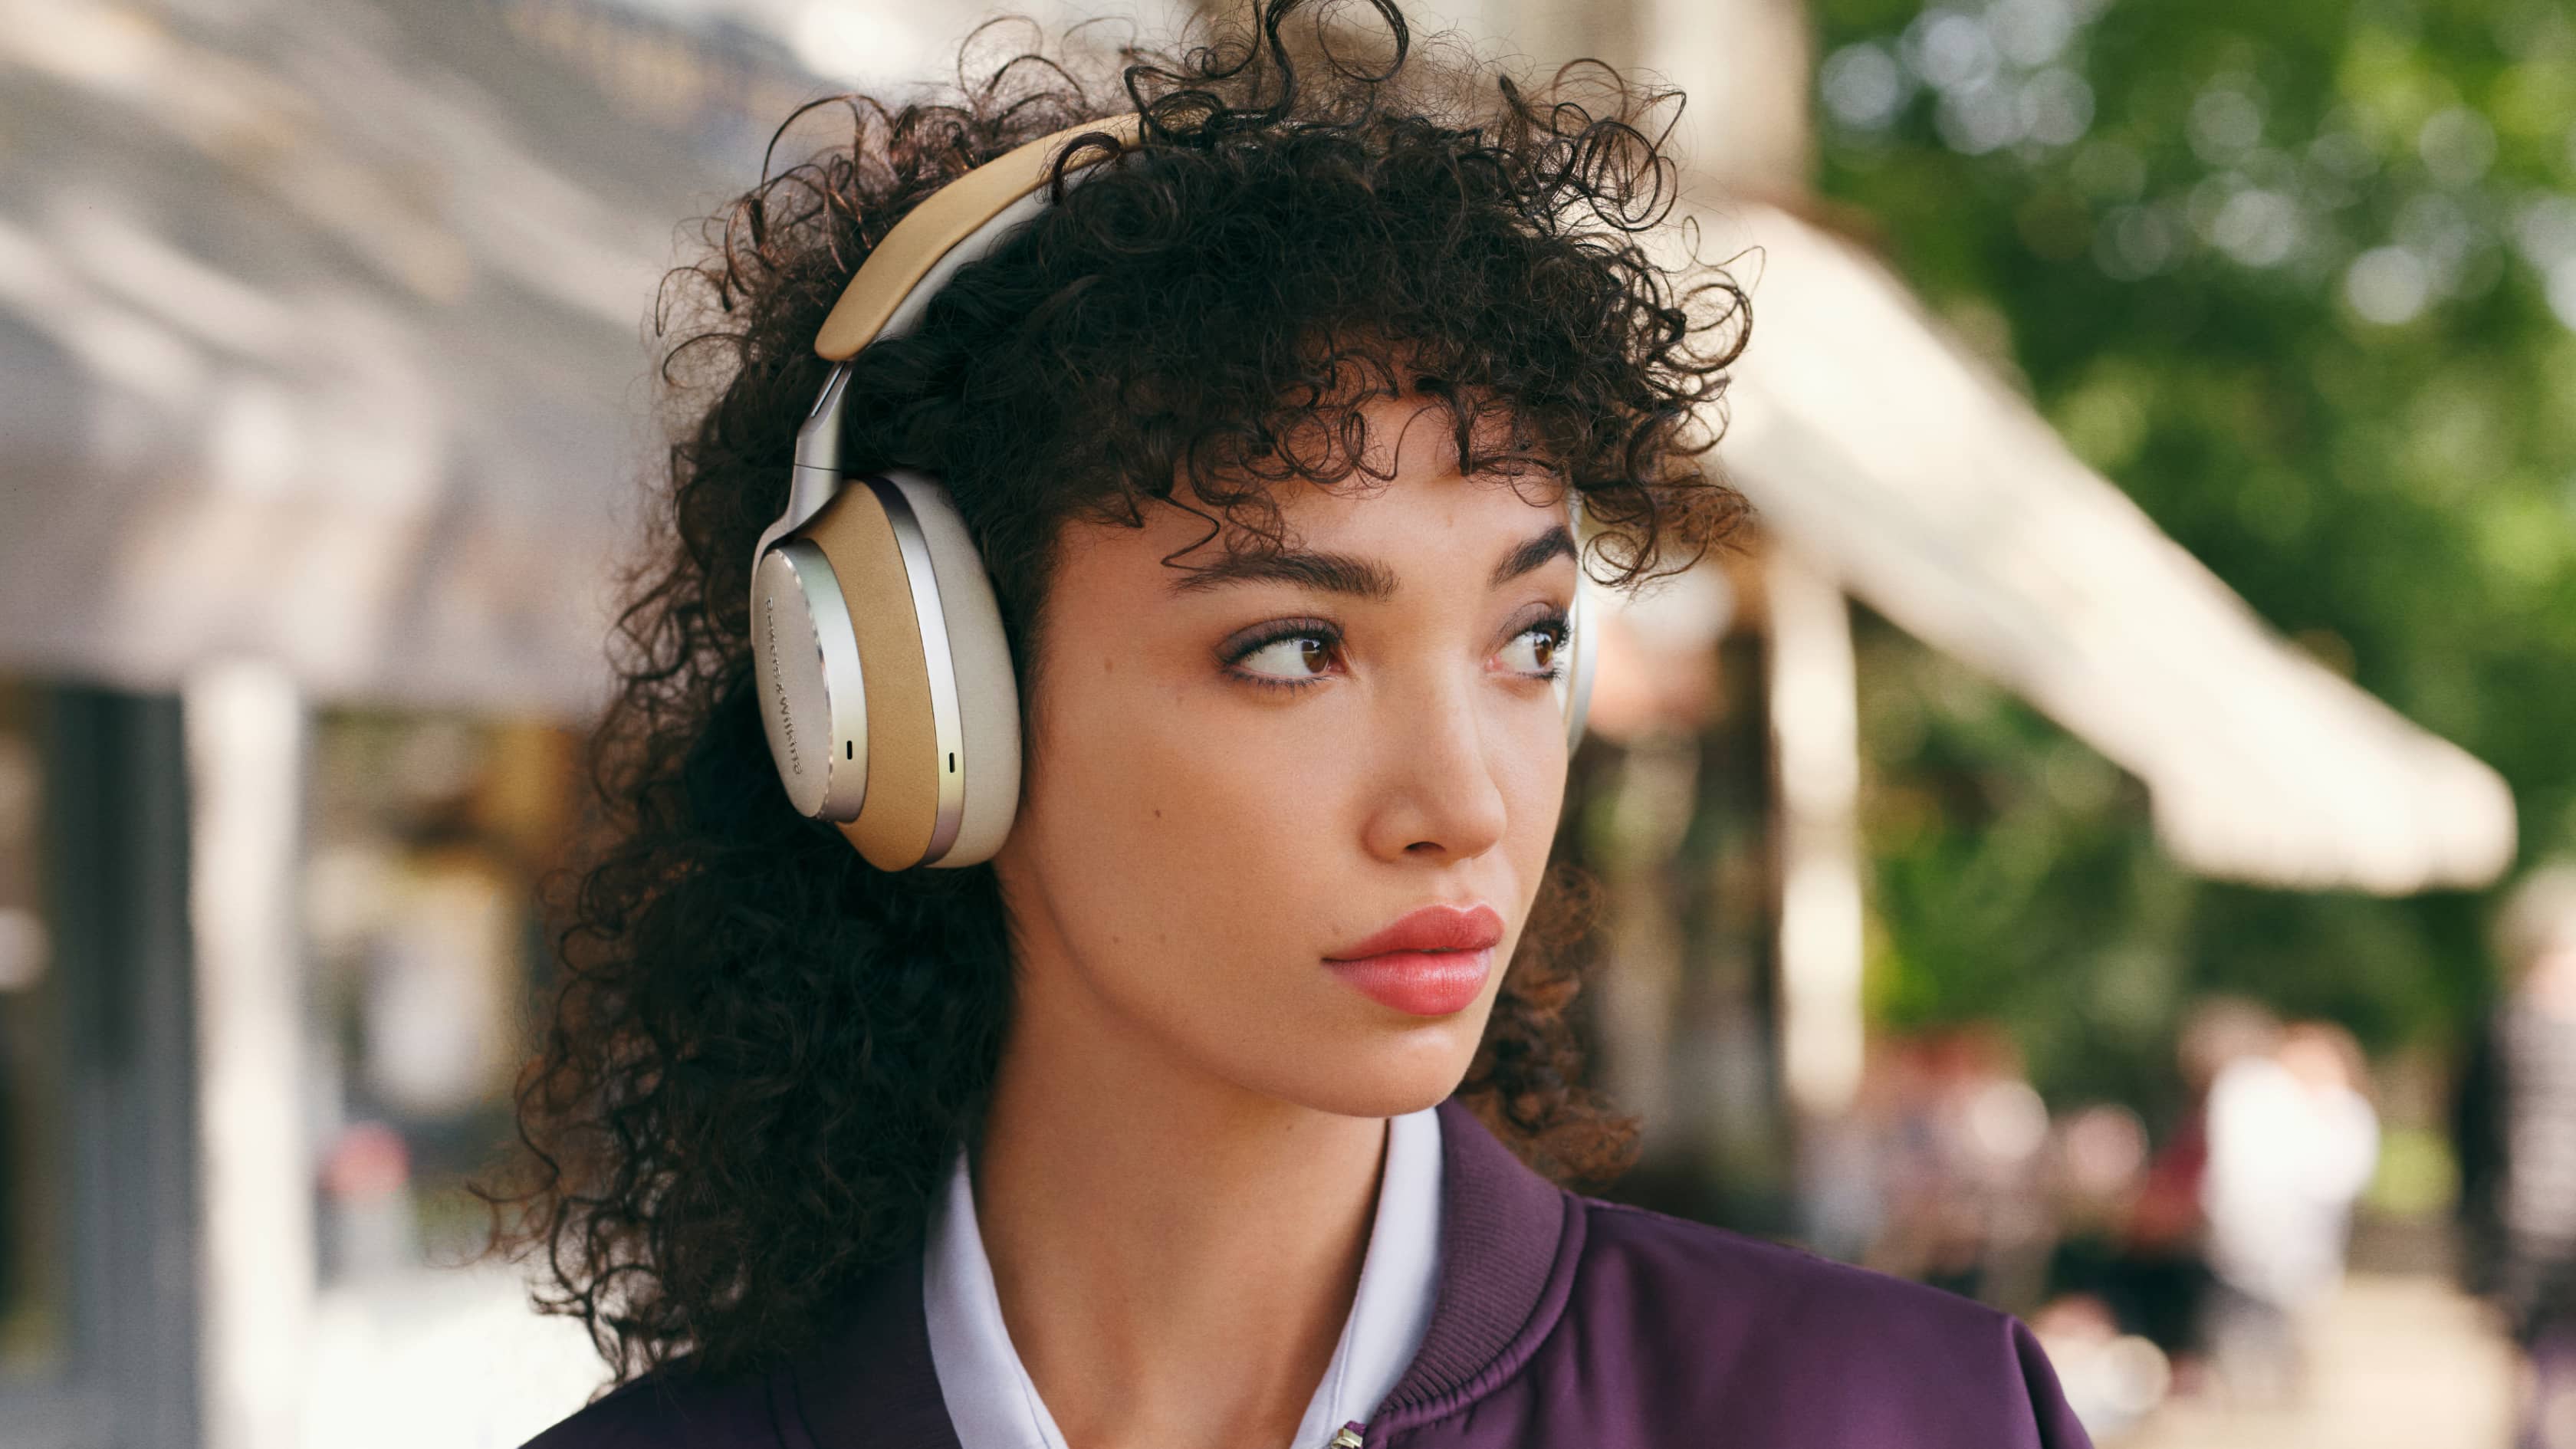 Bowers & Wilkins Px8 wireless over-ear noise-canceling headphone